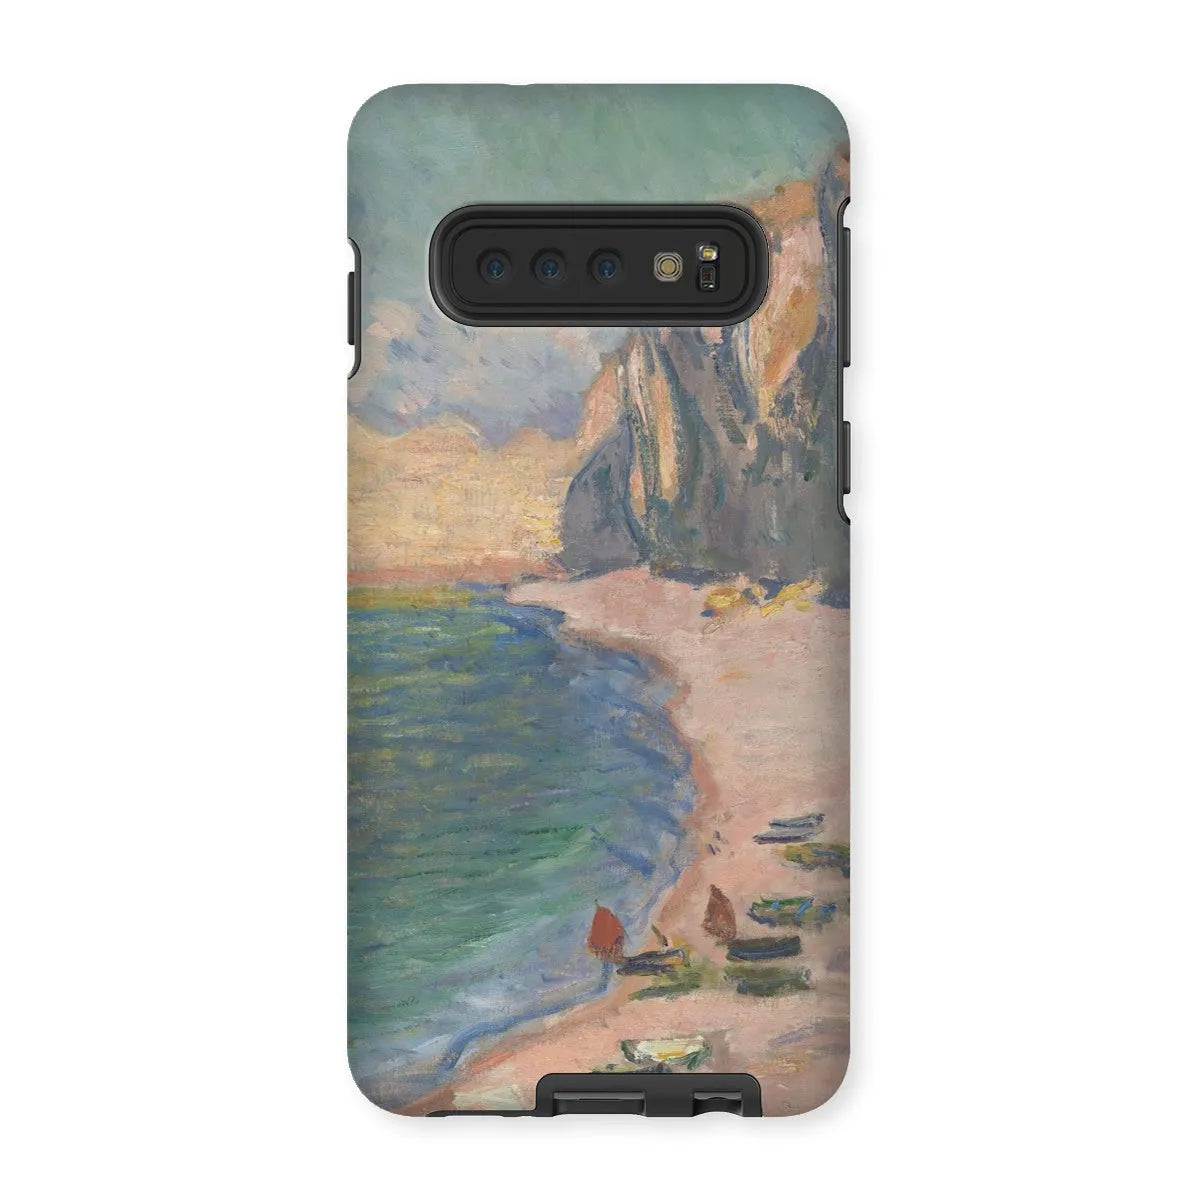 étretat - Impressionist Art Phone Case - Claude Monet - Samsung Galaxy S10 / Matte - Mobile Phone Cases - Aesthetic Art